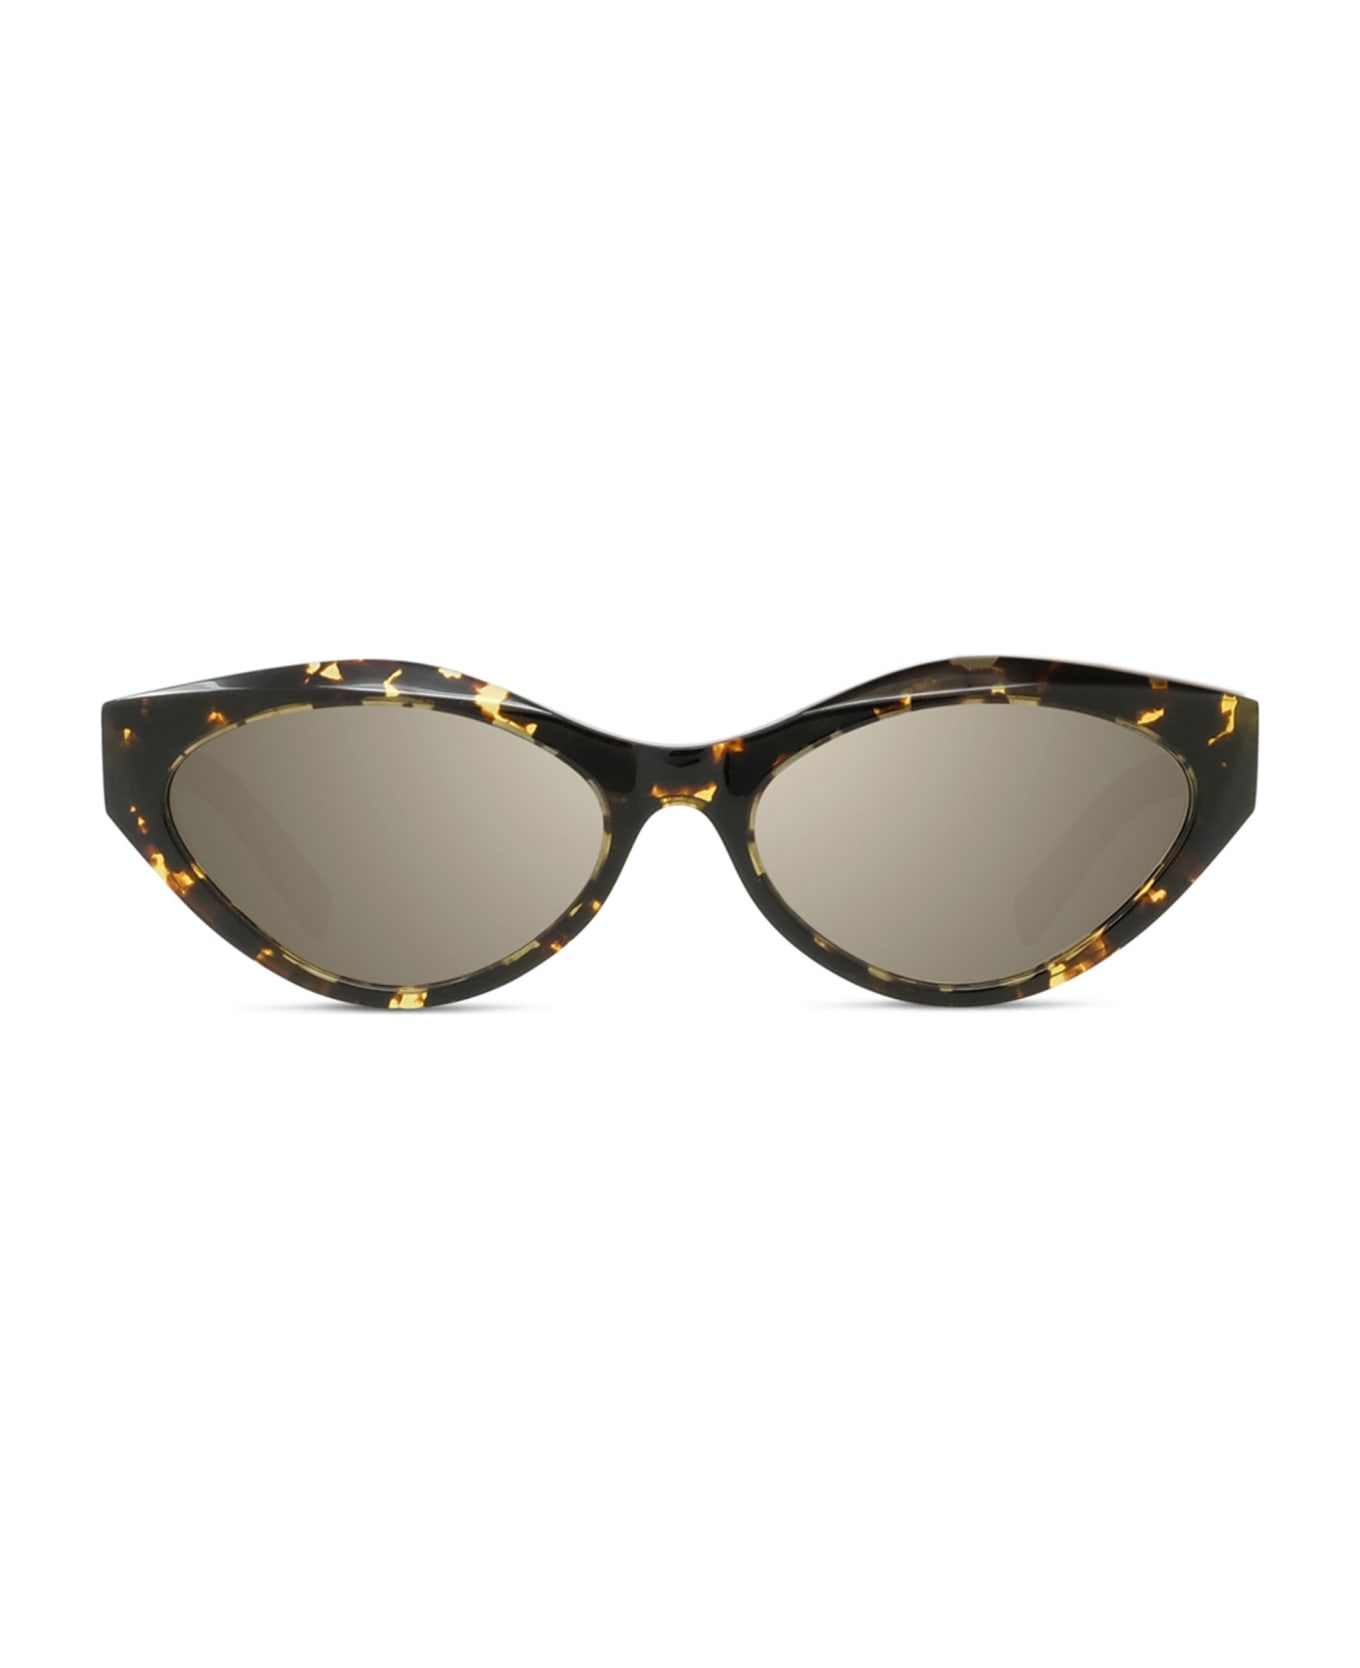 Givenchy Eyewear Gv40025u - Tortoise Sunglasses - tortoise/gold サングラス